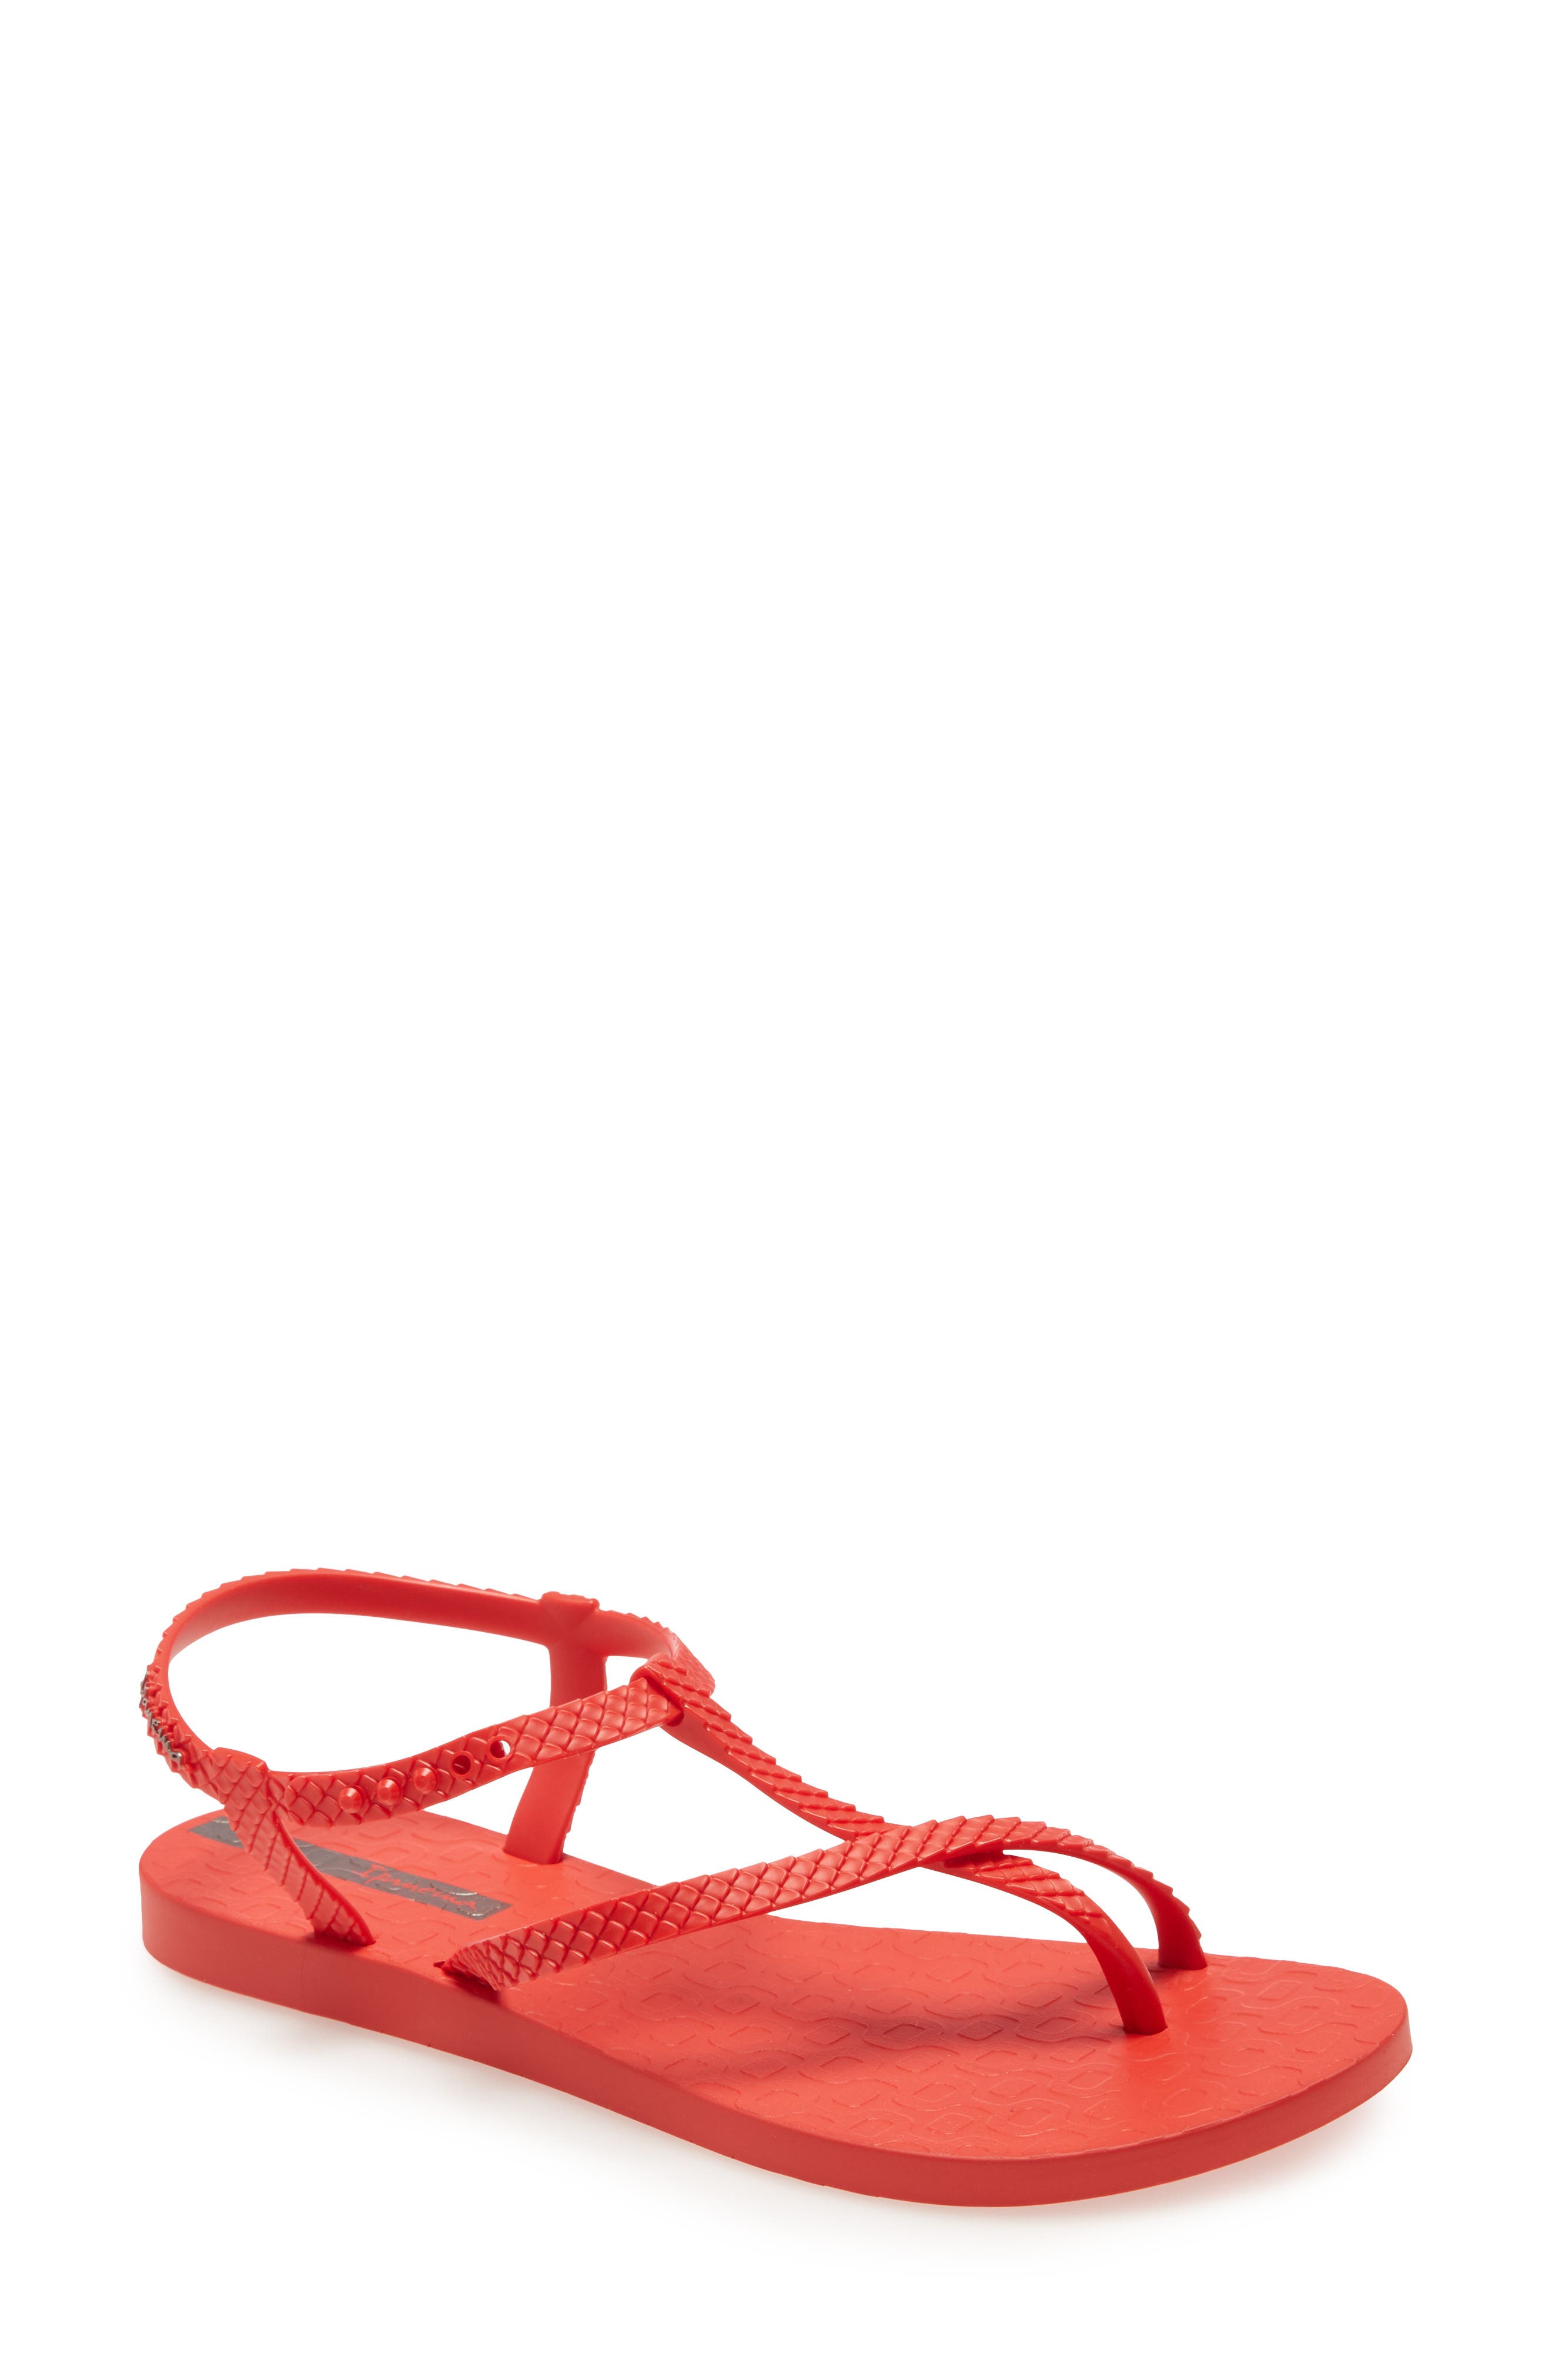 debenhams red sandals